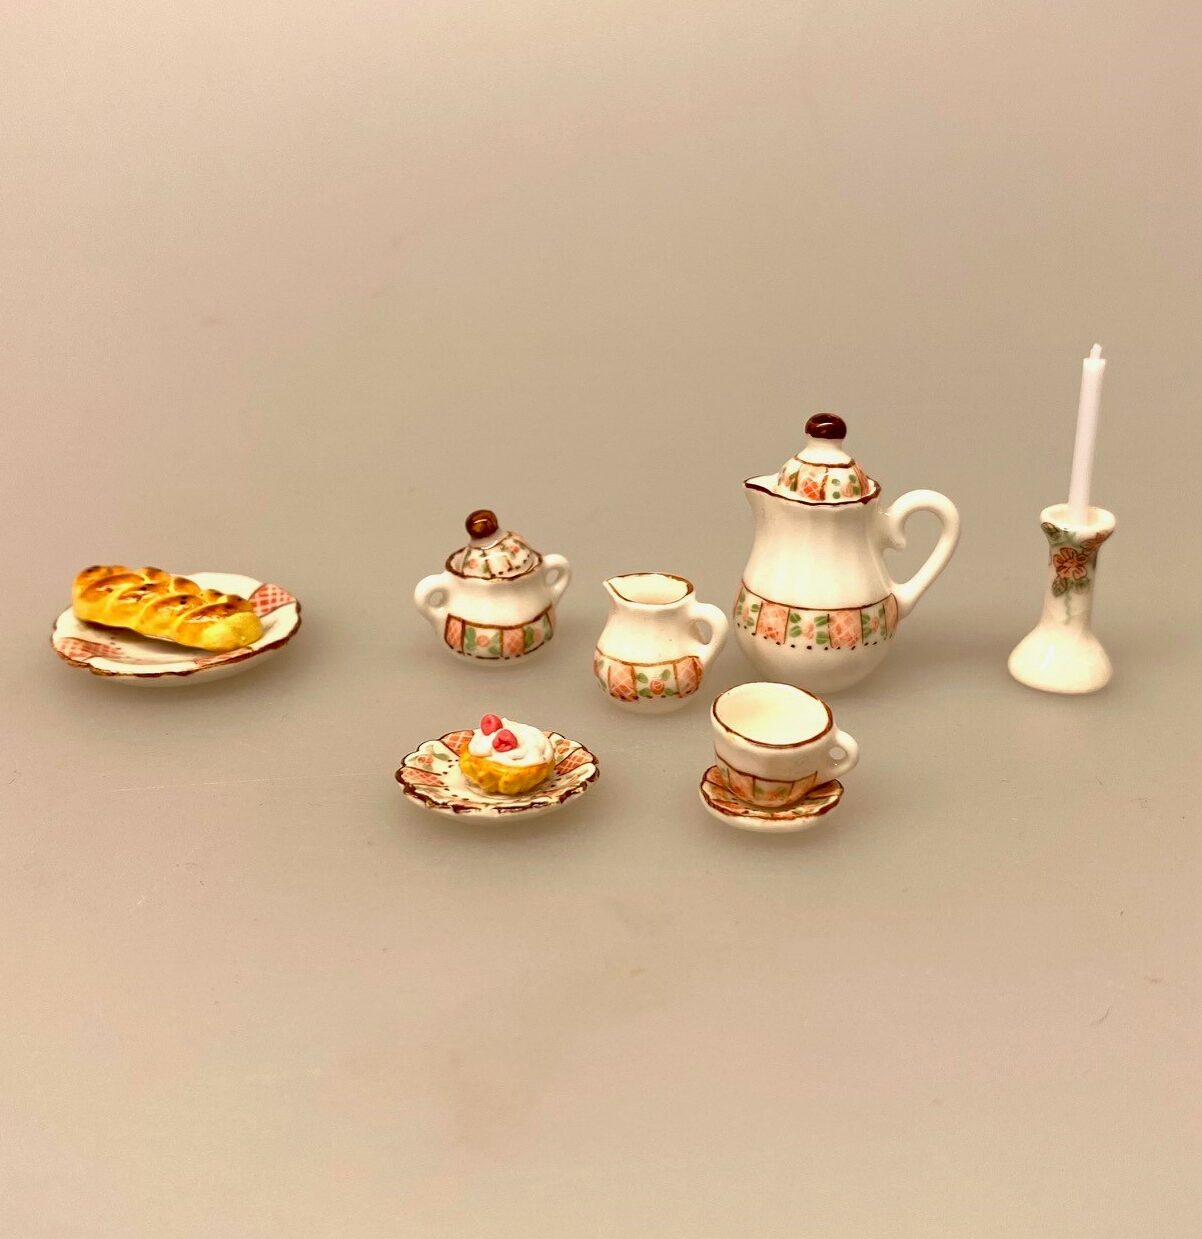 Miniature Kaffekande Porcelæn Rosa, Miniature Fad Porcelæn Rundt, fad, porcelænsfad, serveringsfad, middag, kaffebord, kager, sønderjysk, service, 1:12, miniature, dukkehus, biti, ribe